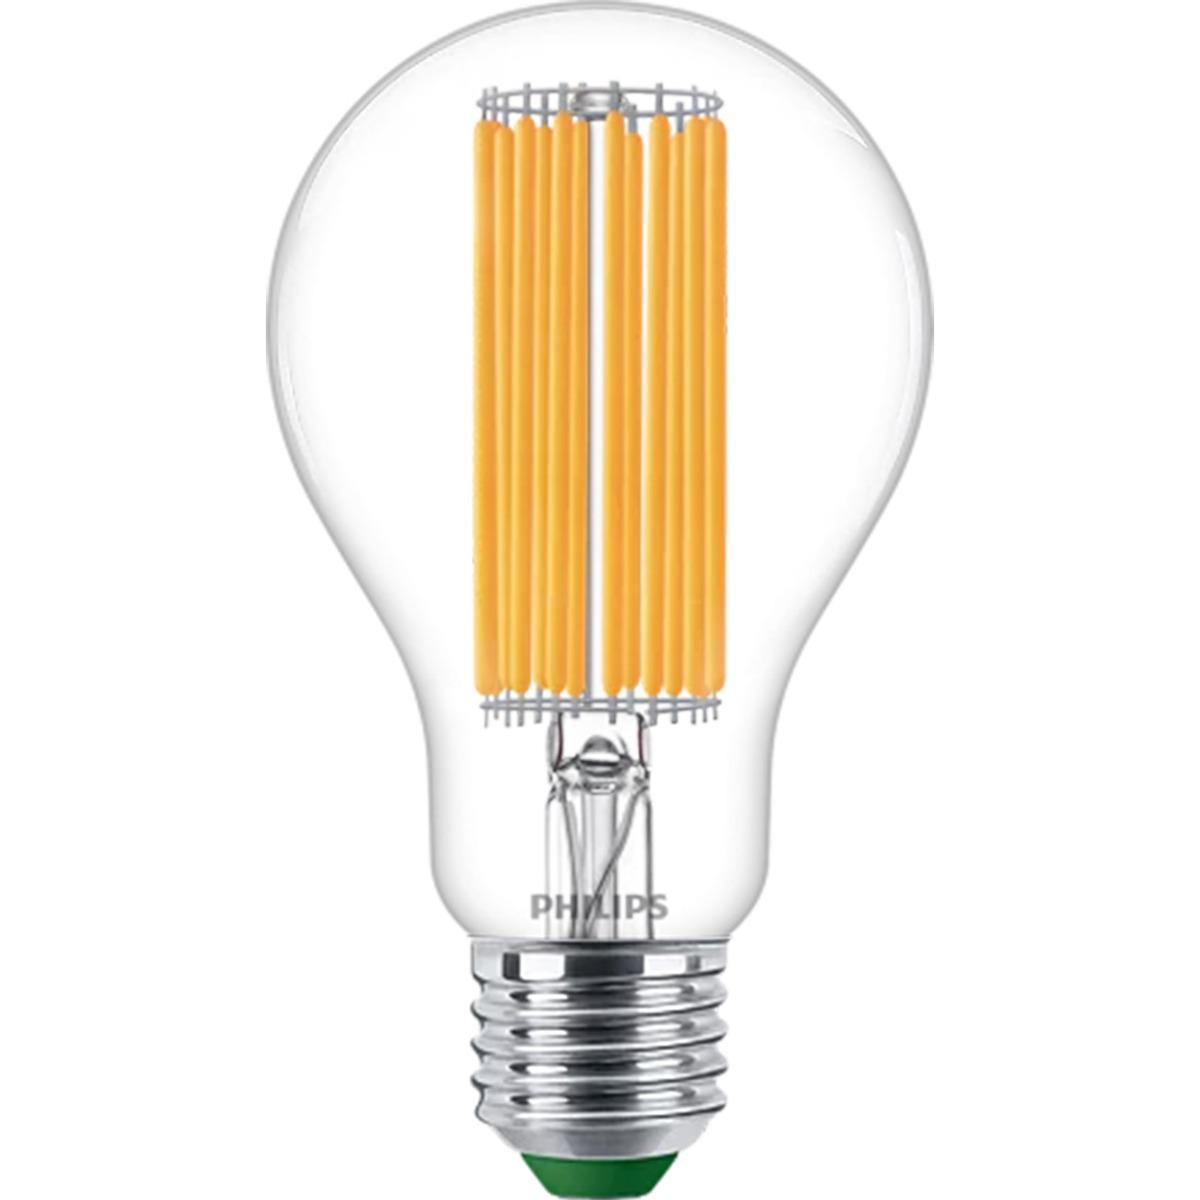 LED žárovka LED A70 E27 7,3W = 100W 1535lm 3000K Teplá bílá 360° Filament PHILIPS ULTRA EFFICIENT PHIUEL0035